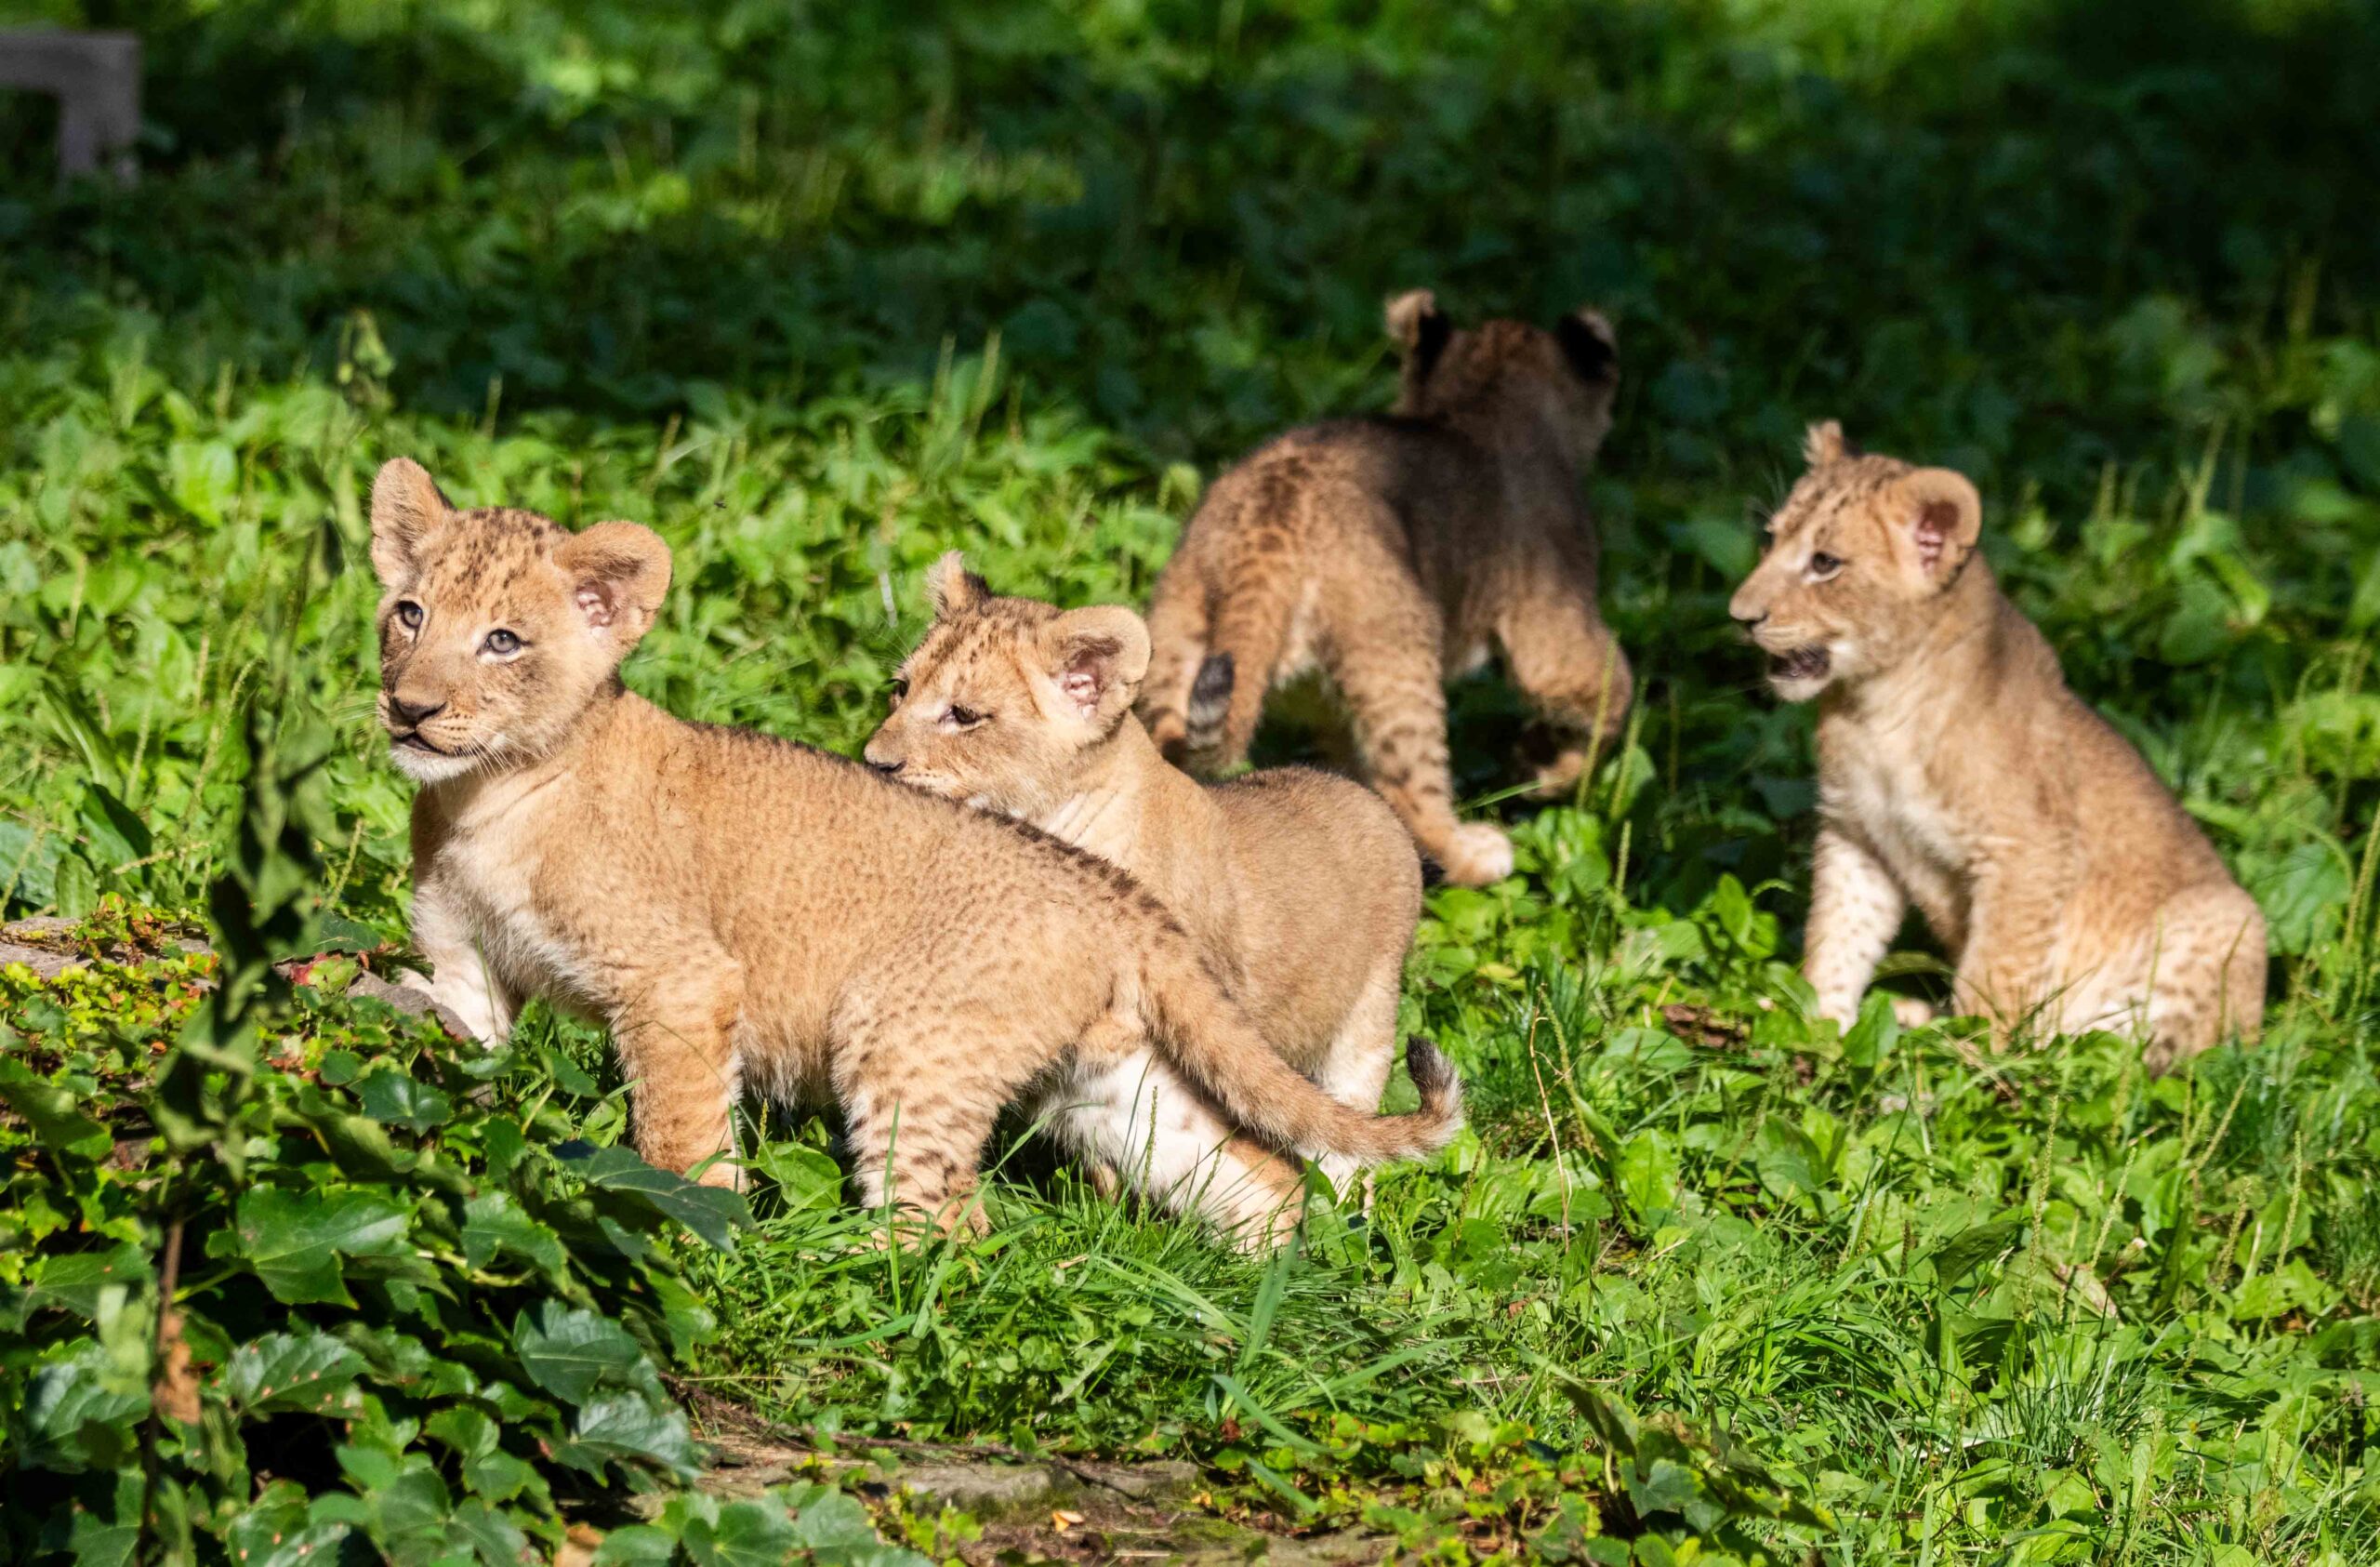 Buffalo Zoo Lion Cubs Make Public Debut - Buffalo Zoo